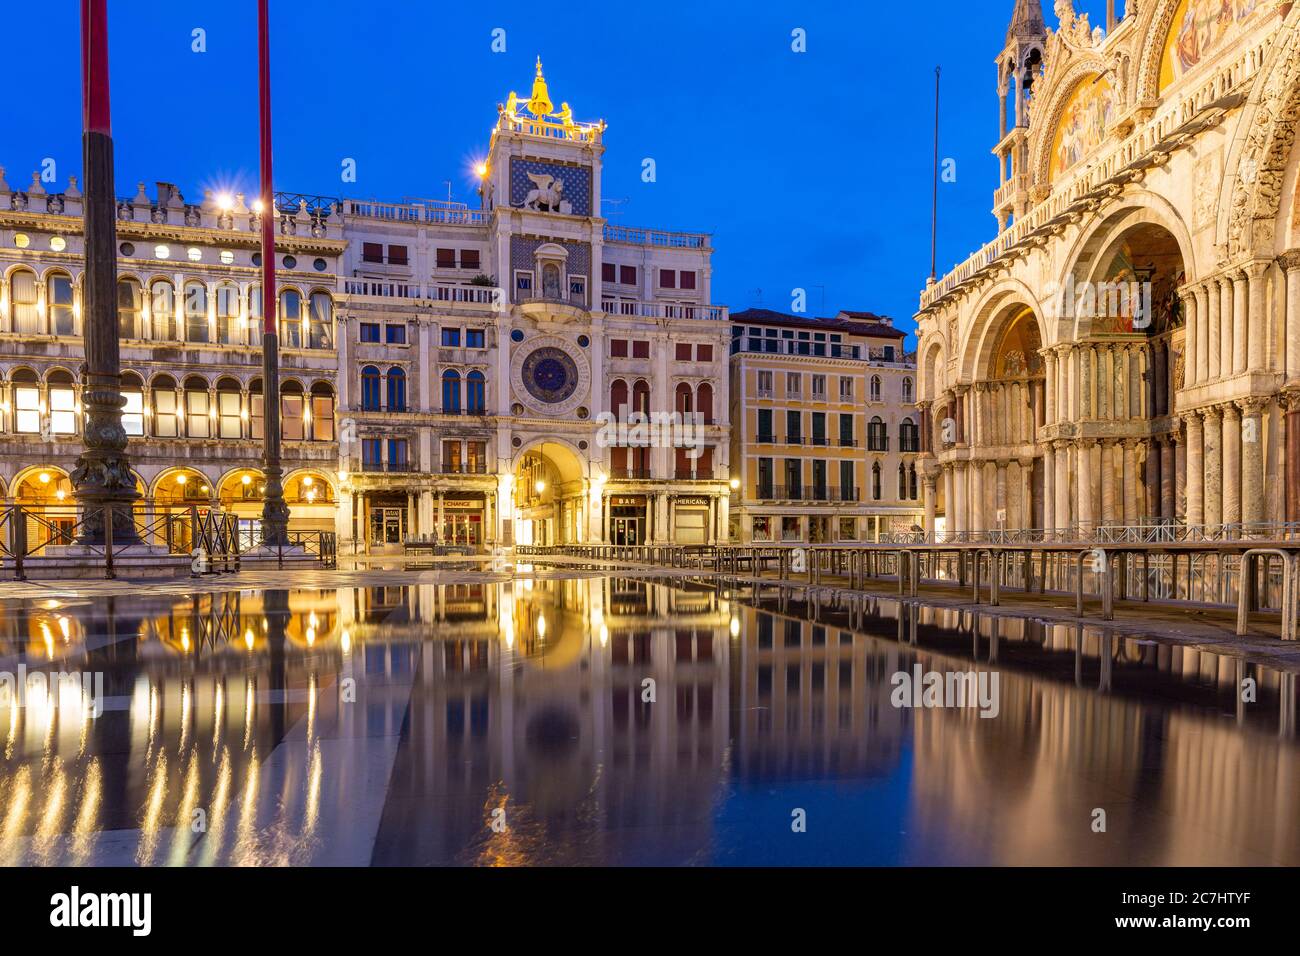 Reflection on St. Mark's Square, St. Mark's Basilica, clock tower, Venice, Italy Stock Photo